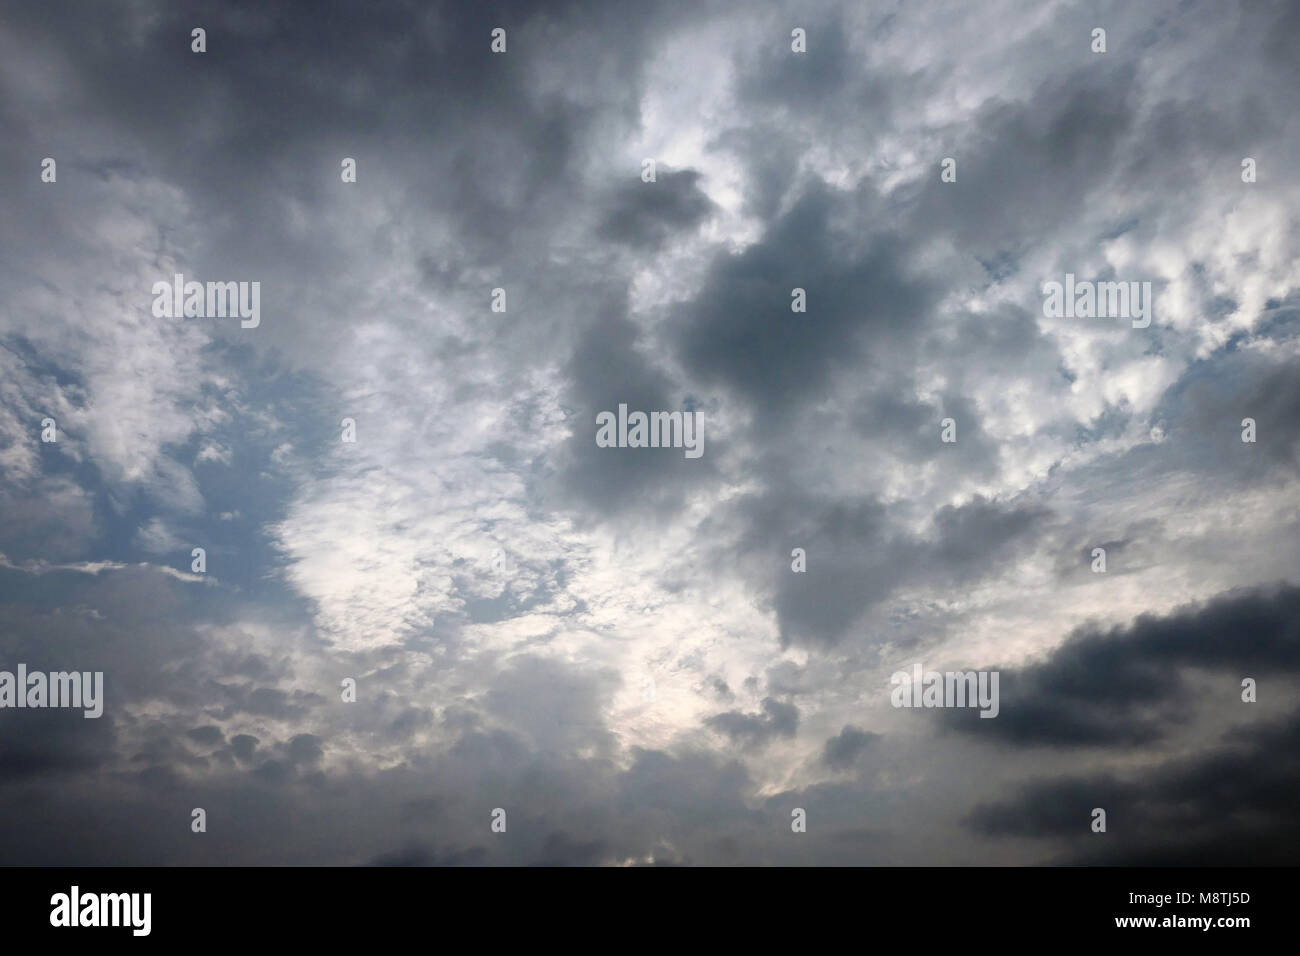 Dramatic rainy sky, storm background Stock Photo